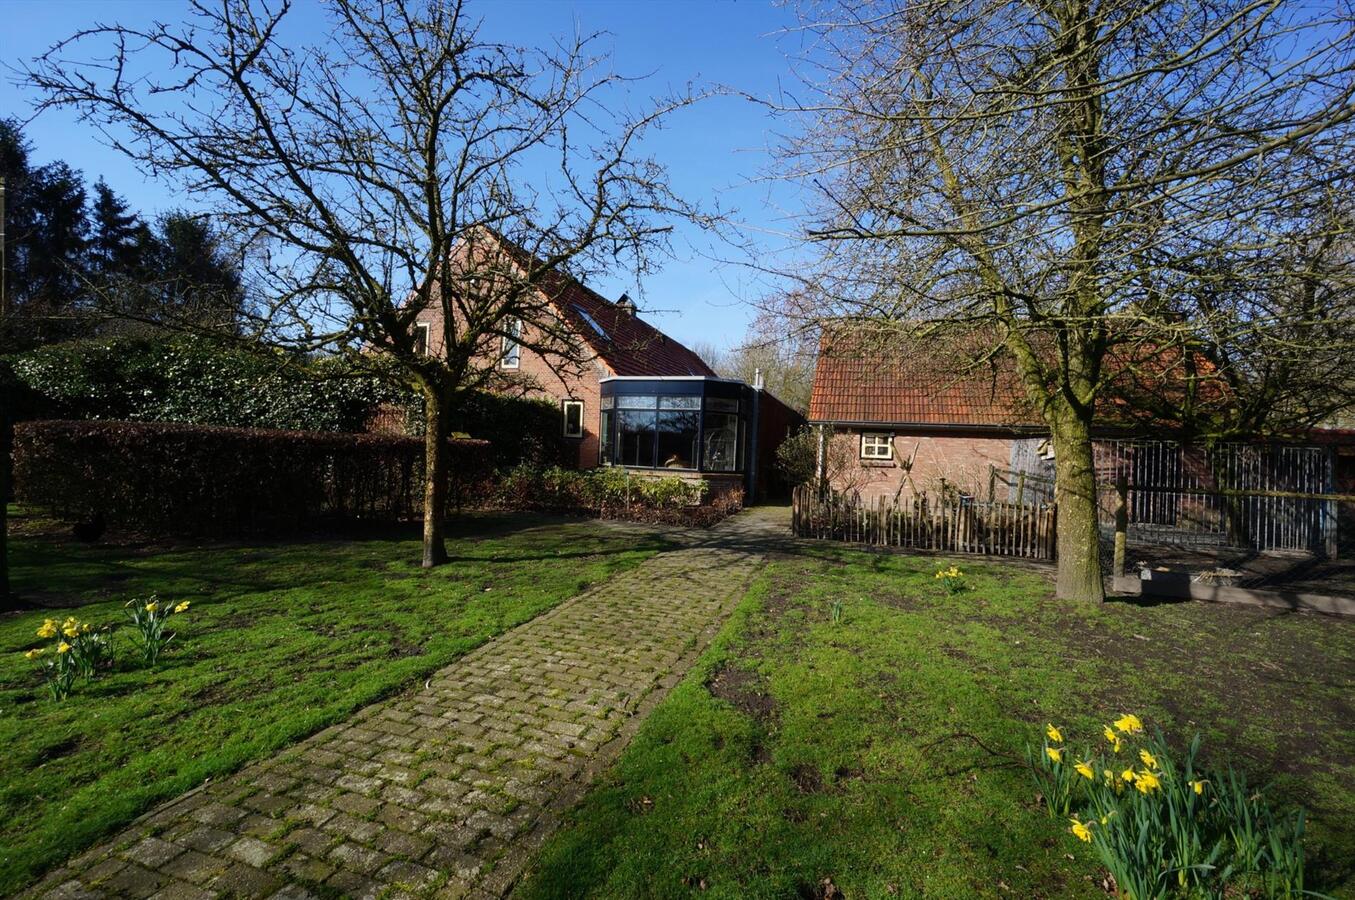 Property sold in Weelde